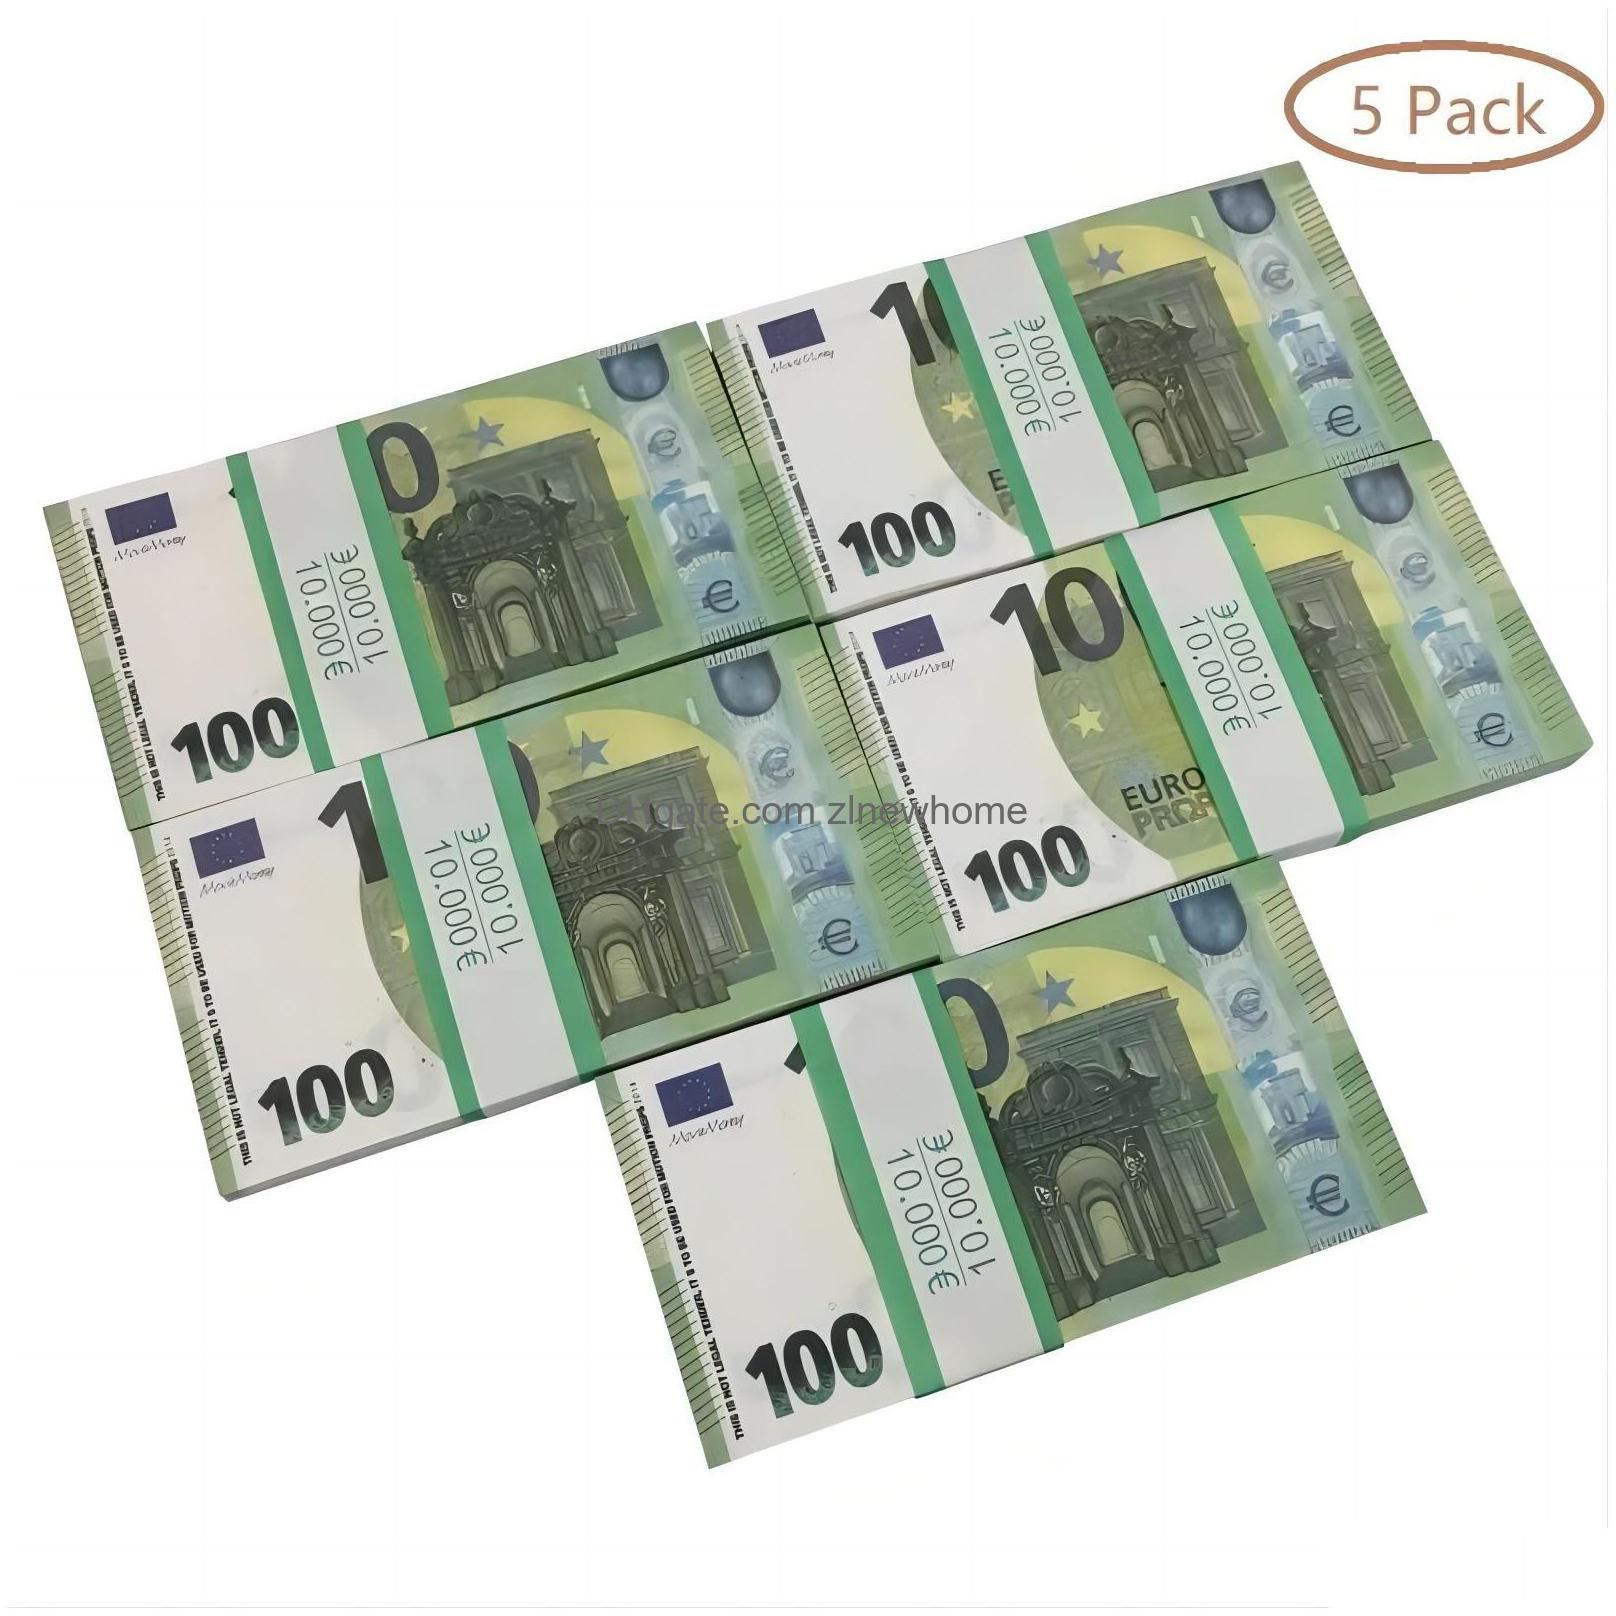 5Pack 100 Euros